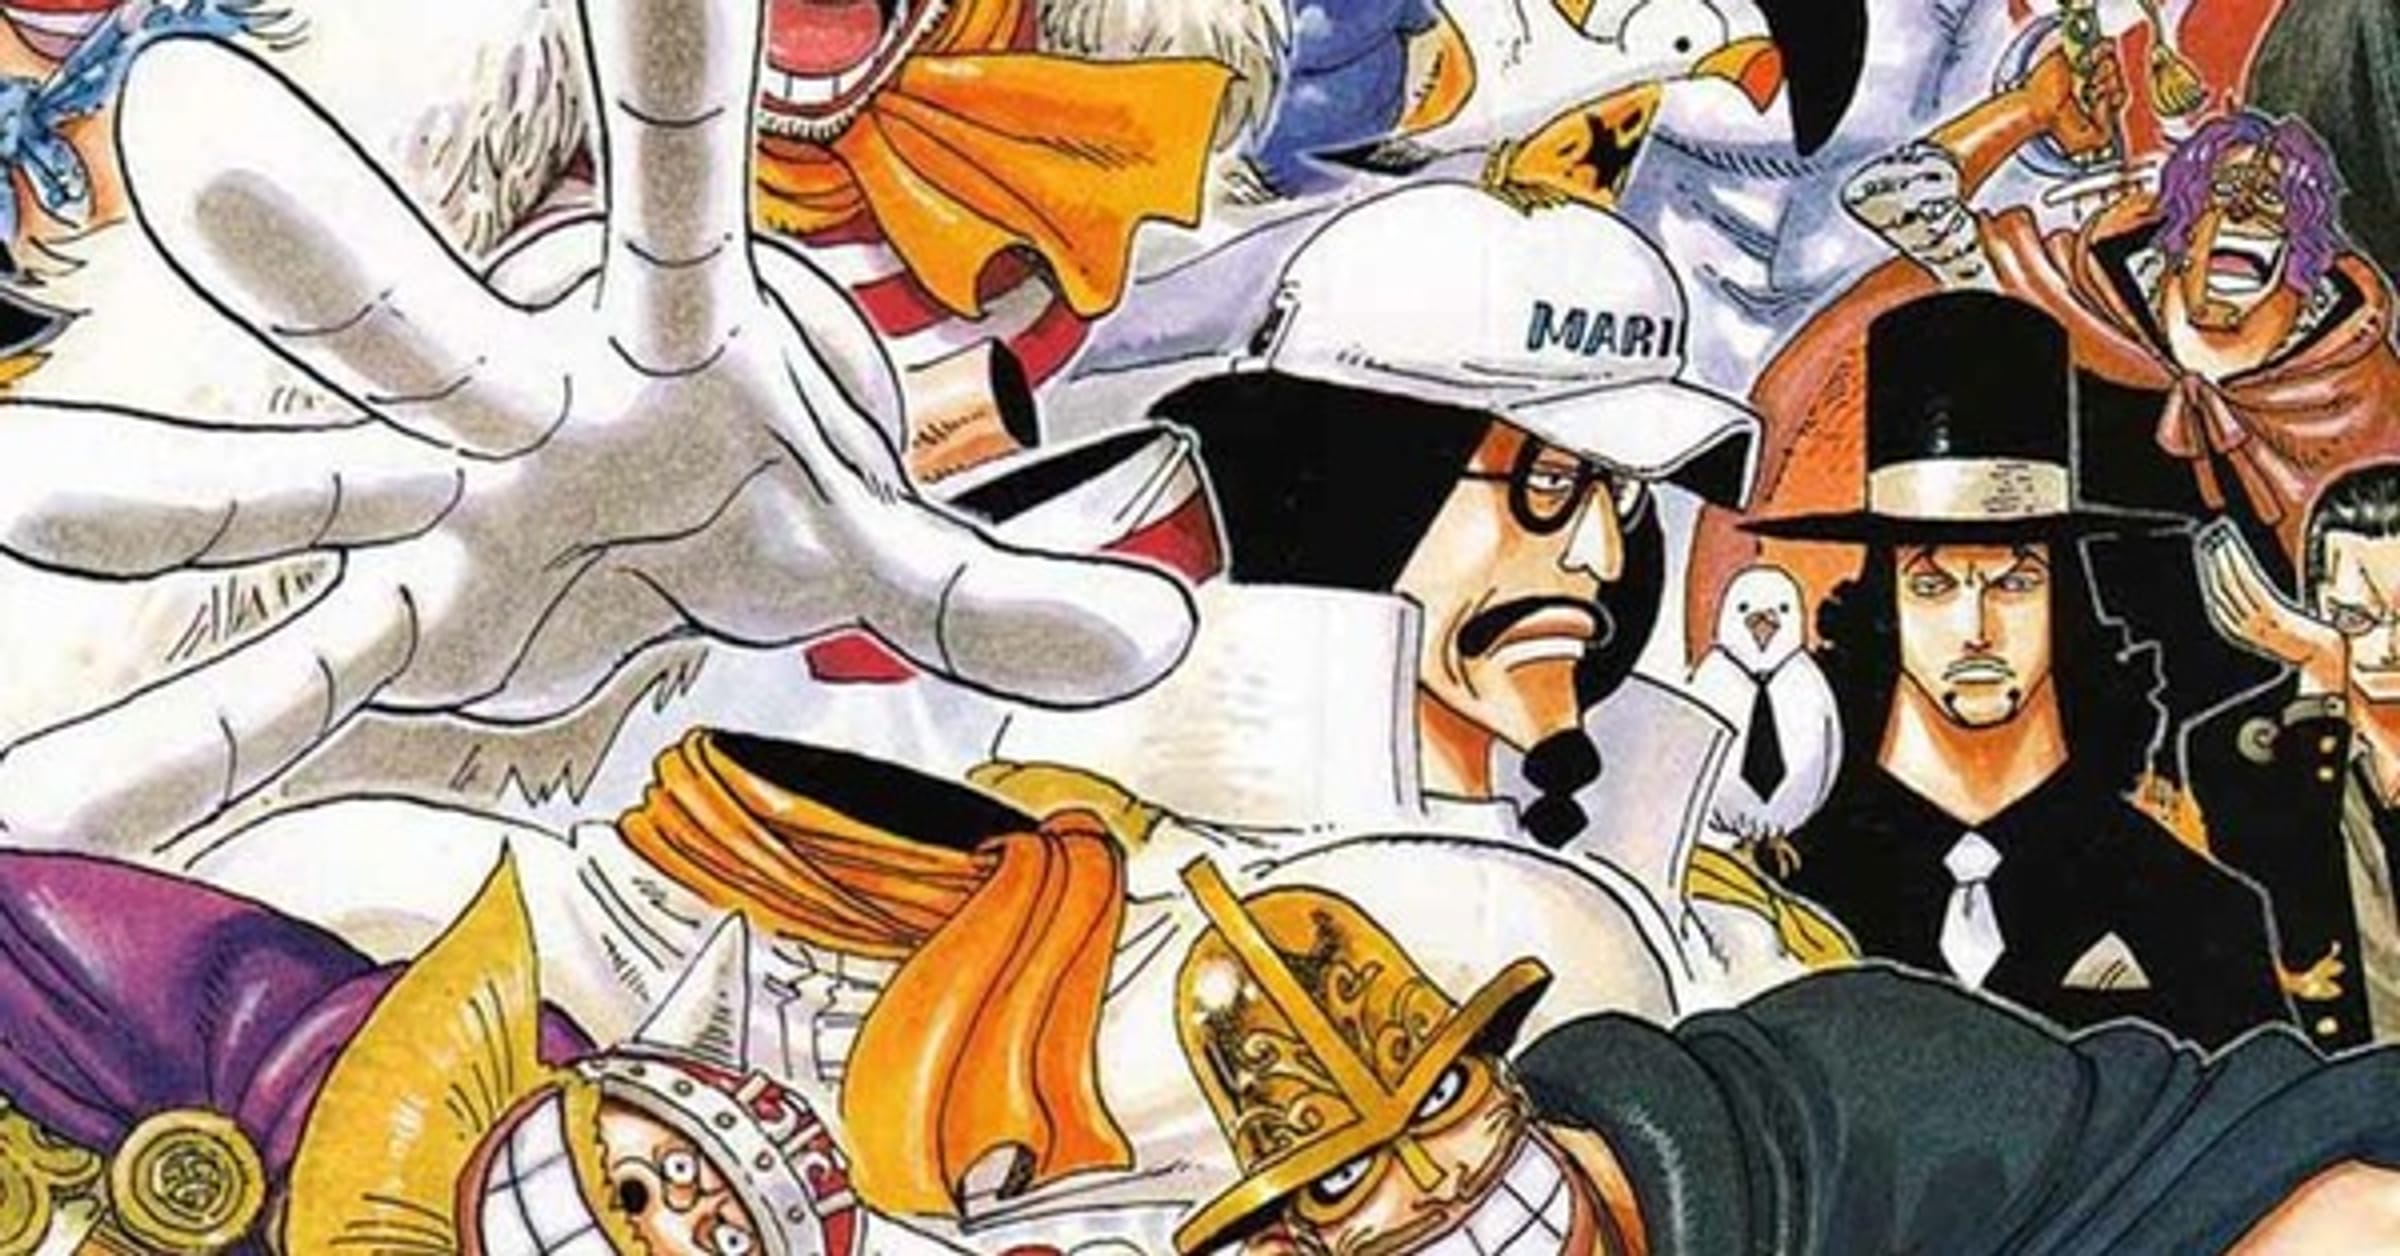 Top 15 Strongest Fishmen in One Piece - Ranked List